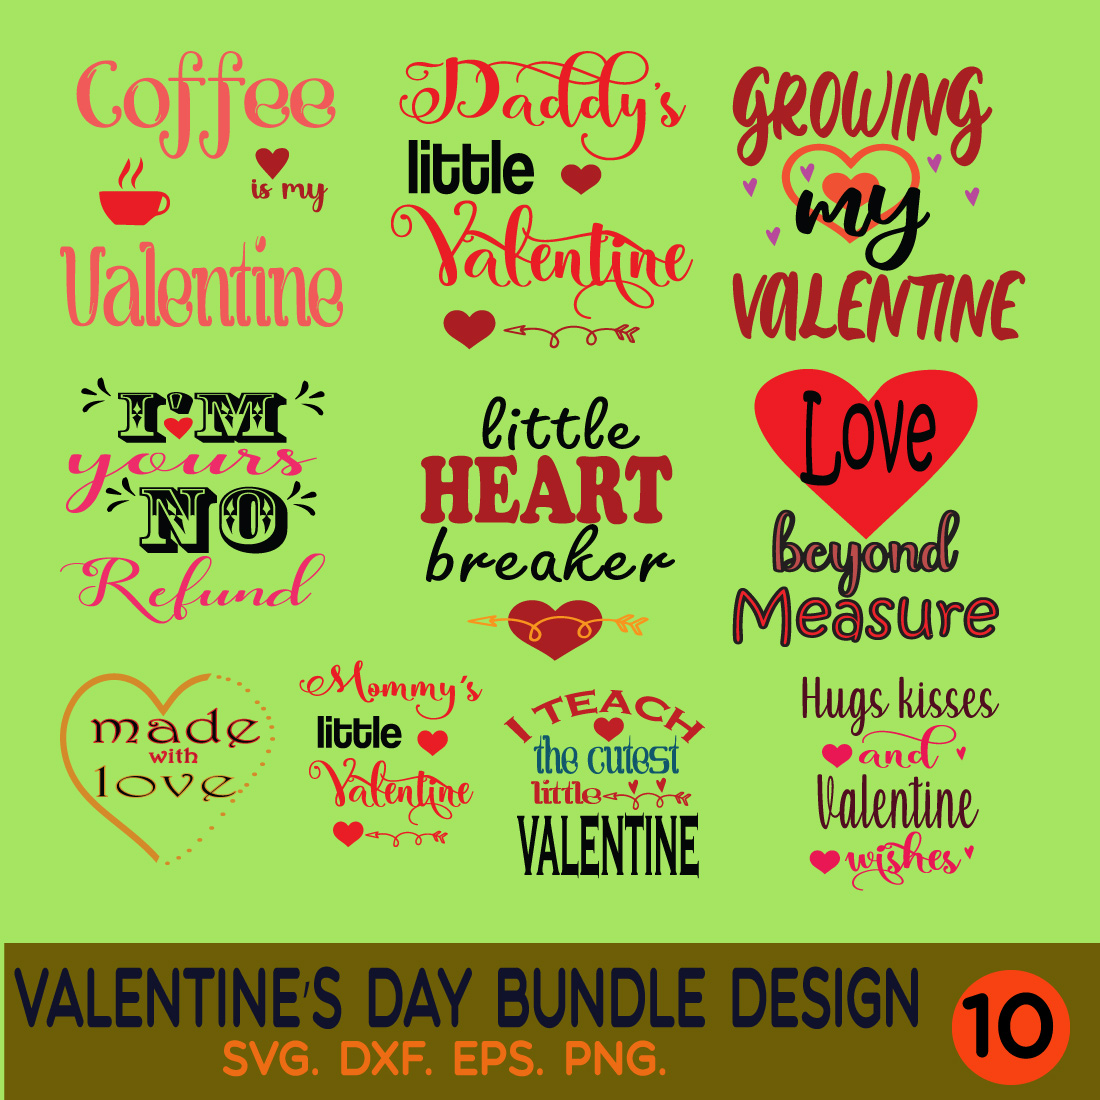 Valentine's Day Bundle Design cover image.